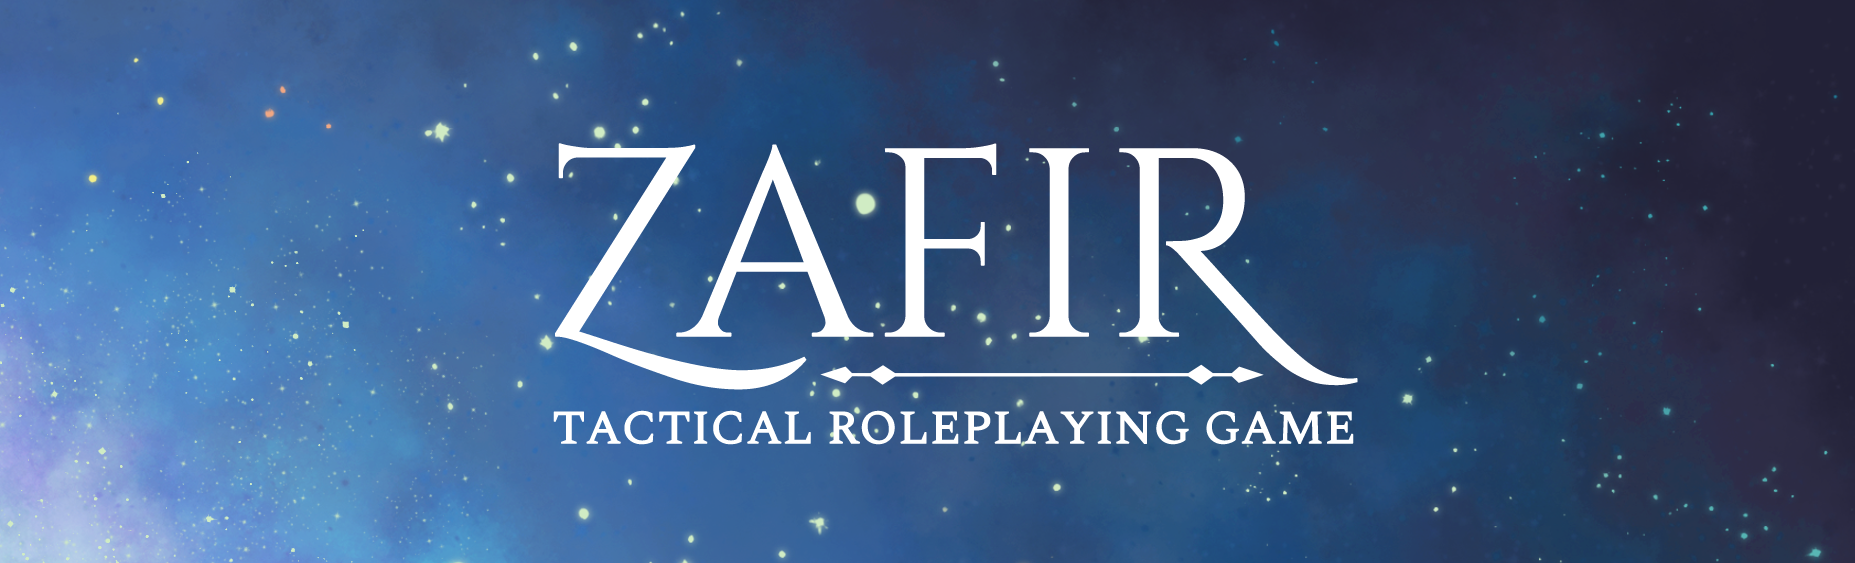 Zafir: Tactical Roleplaying Game - Rulebook